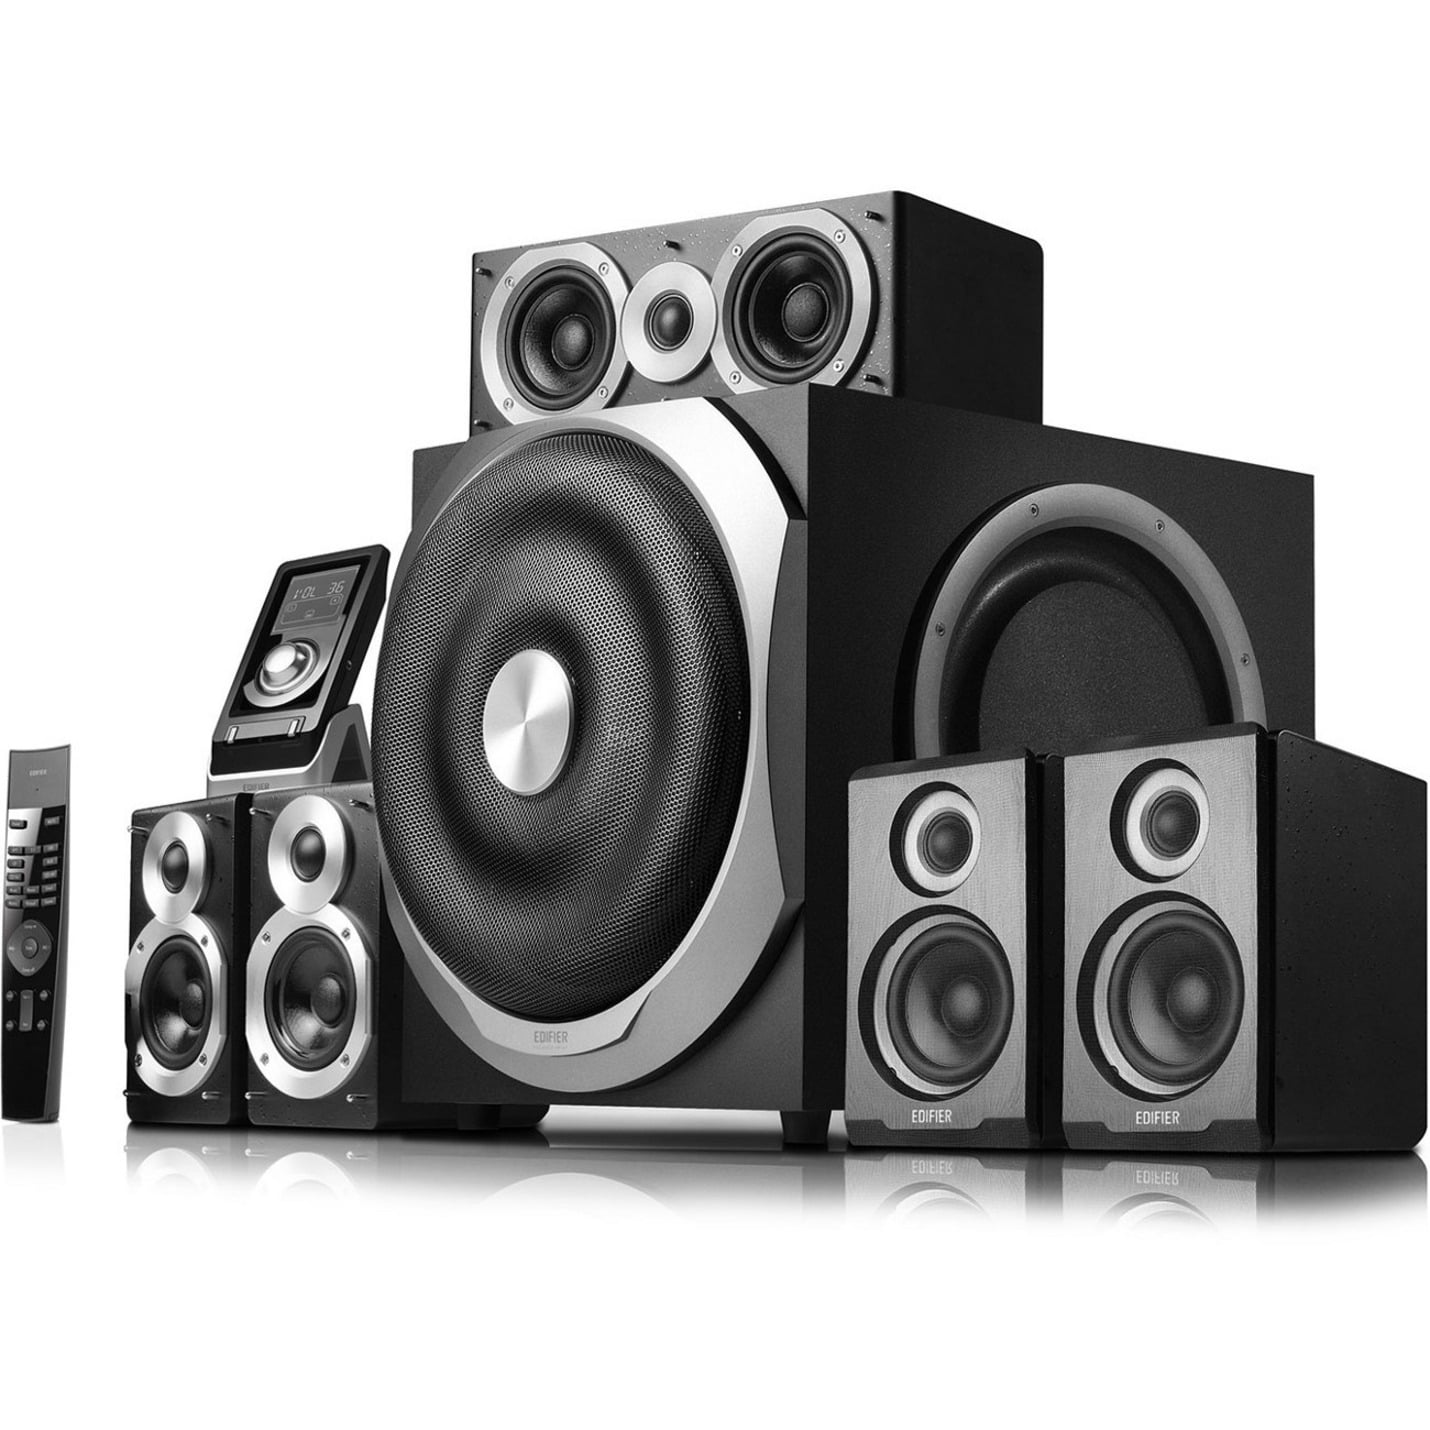 Edifier S760D 5.1 Surround Sound Speakers